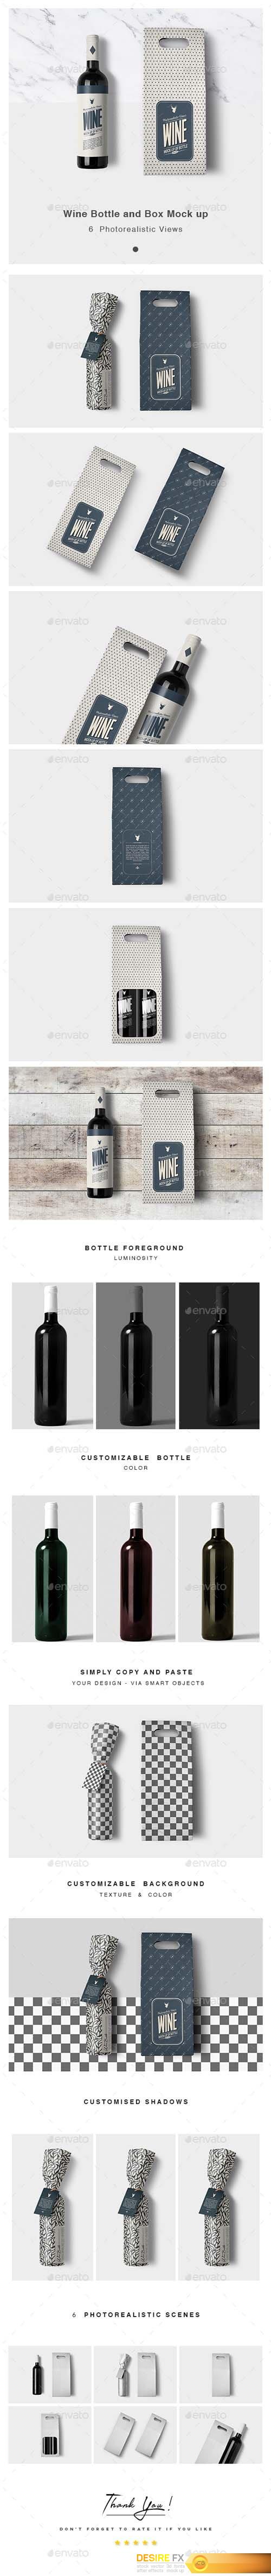 Wine Bottle and Box Mock up 19863778